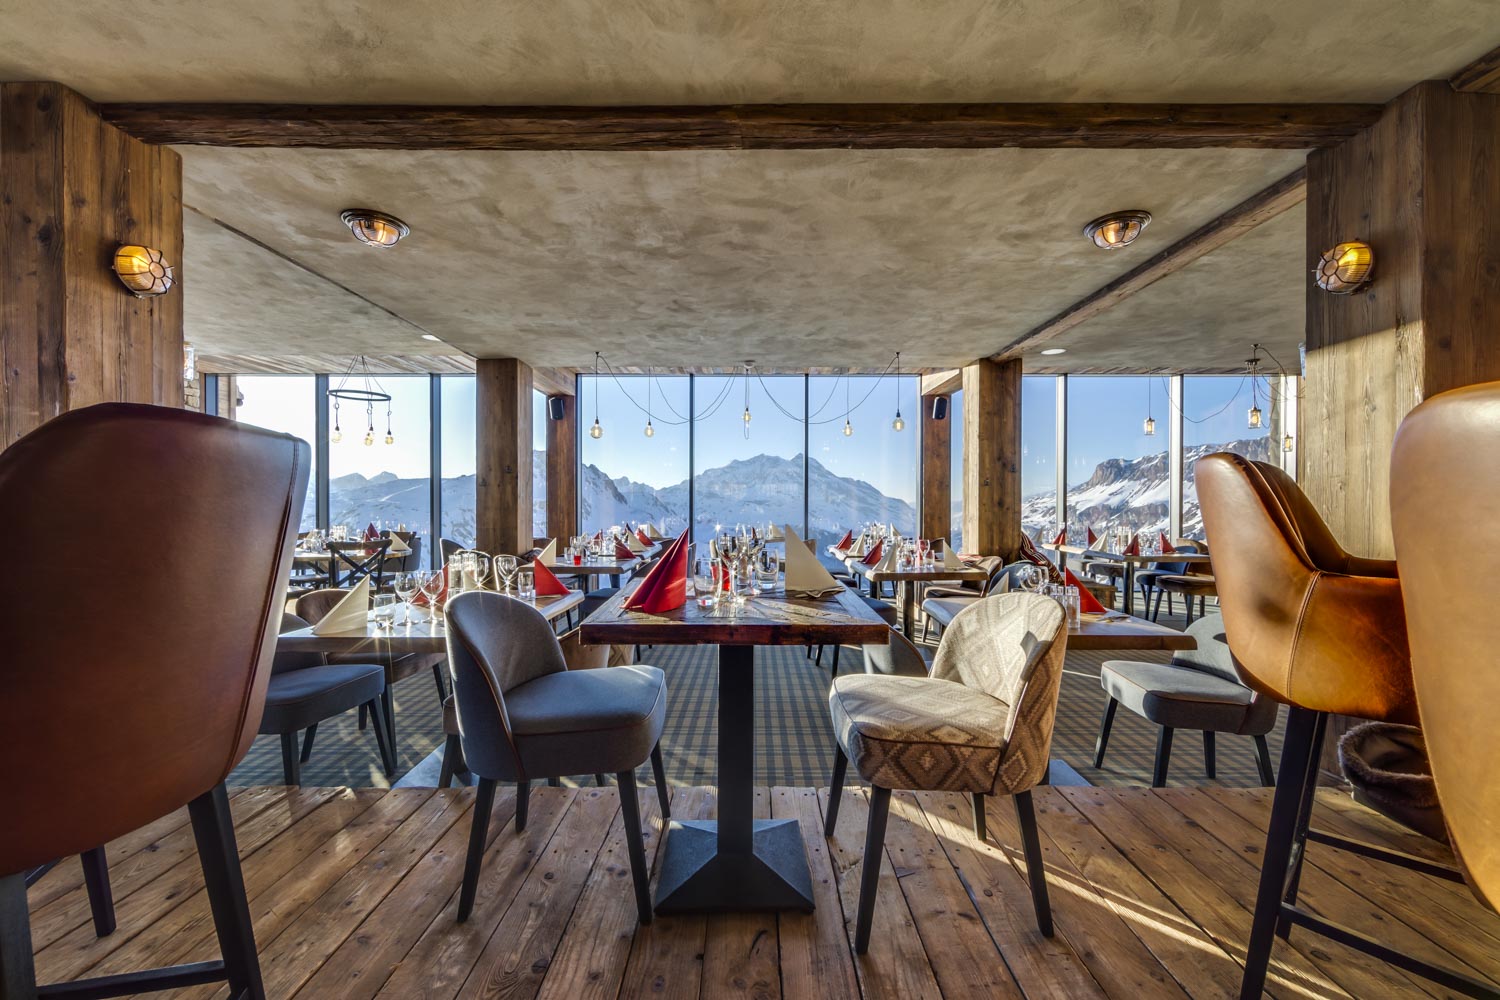 Le Refuge de Solaise - Luxury Hotel Restaurant - Restaurant with View - Val d'Isère - Mountain View